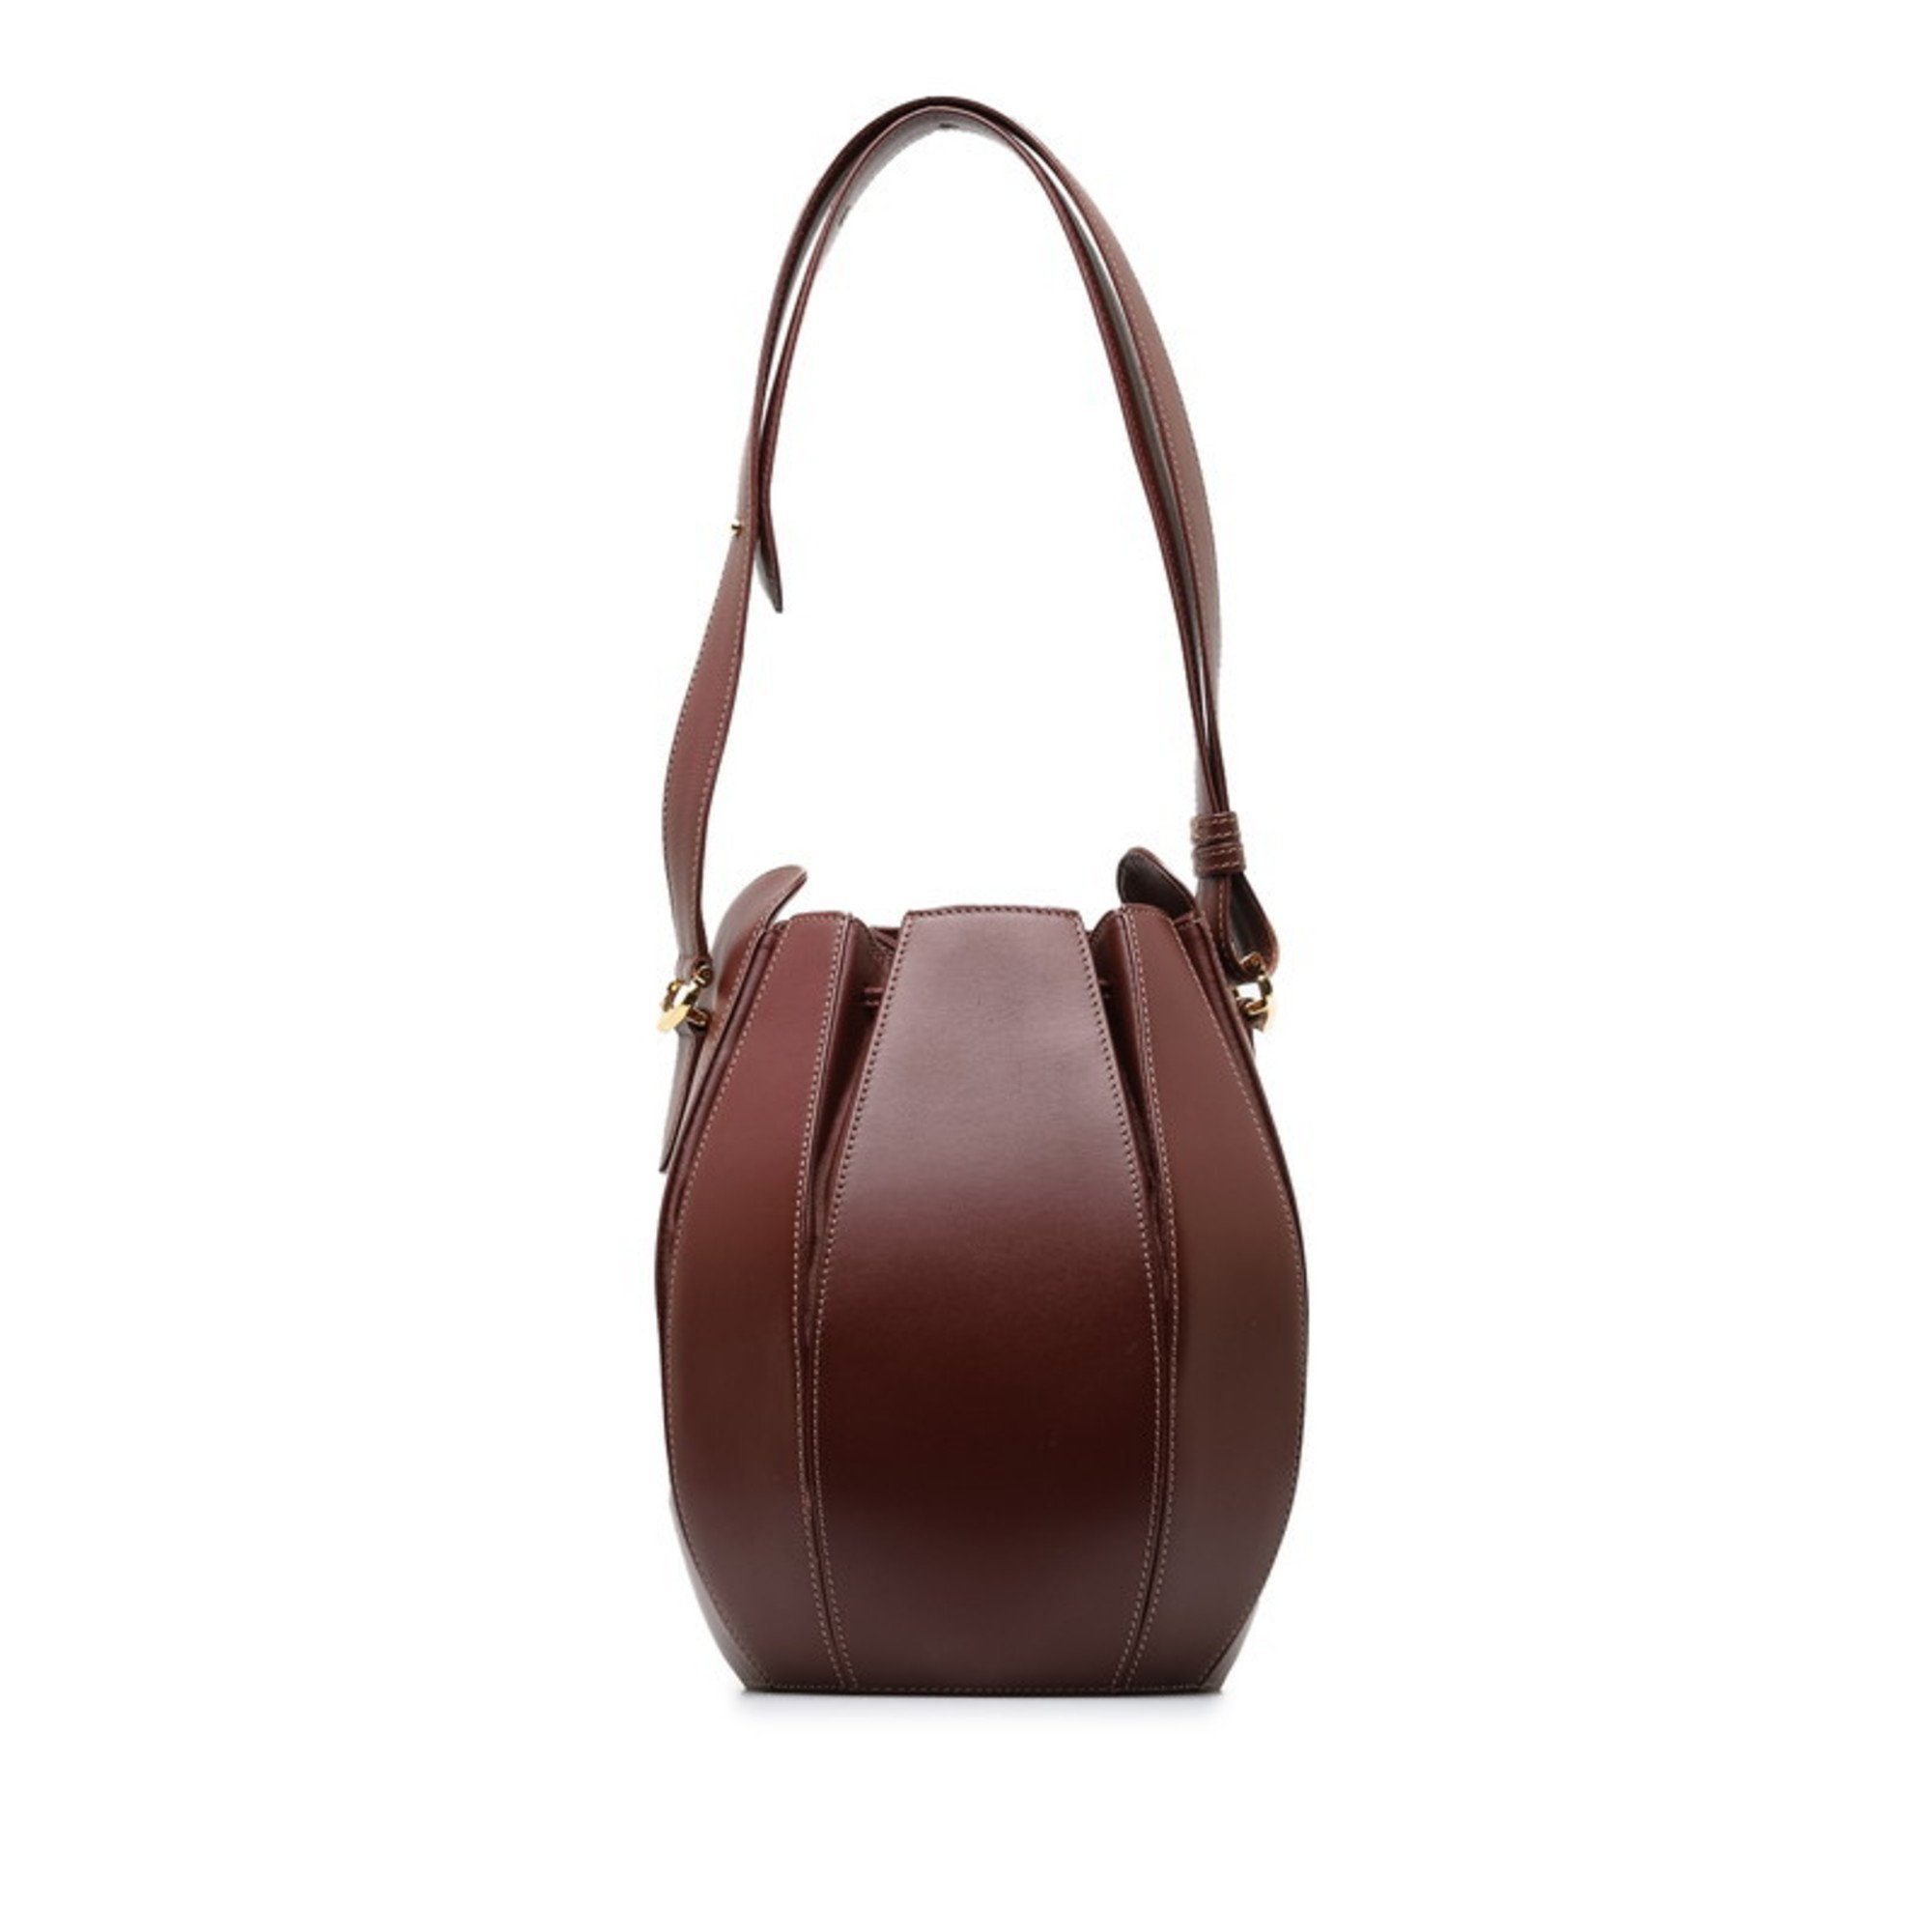 Cartier Must Line Handbag Shoulder Bag Bordeaux Wine Red Leather Women's CARTIER